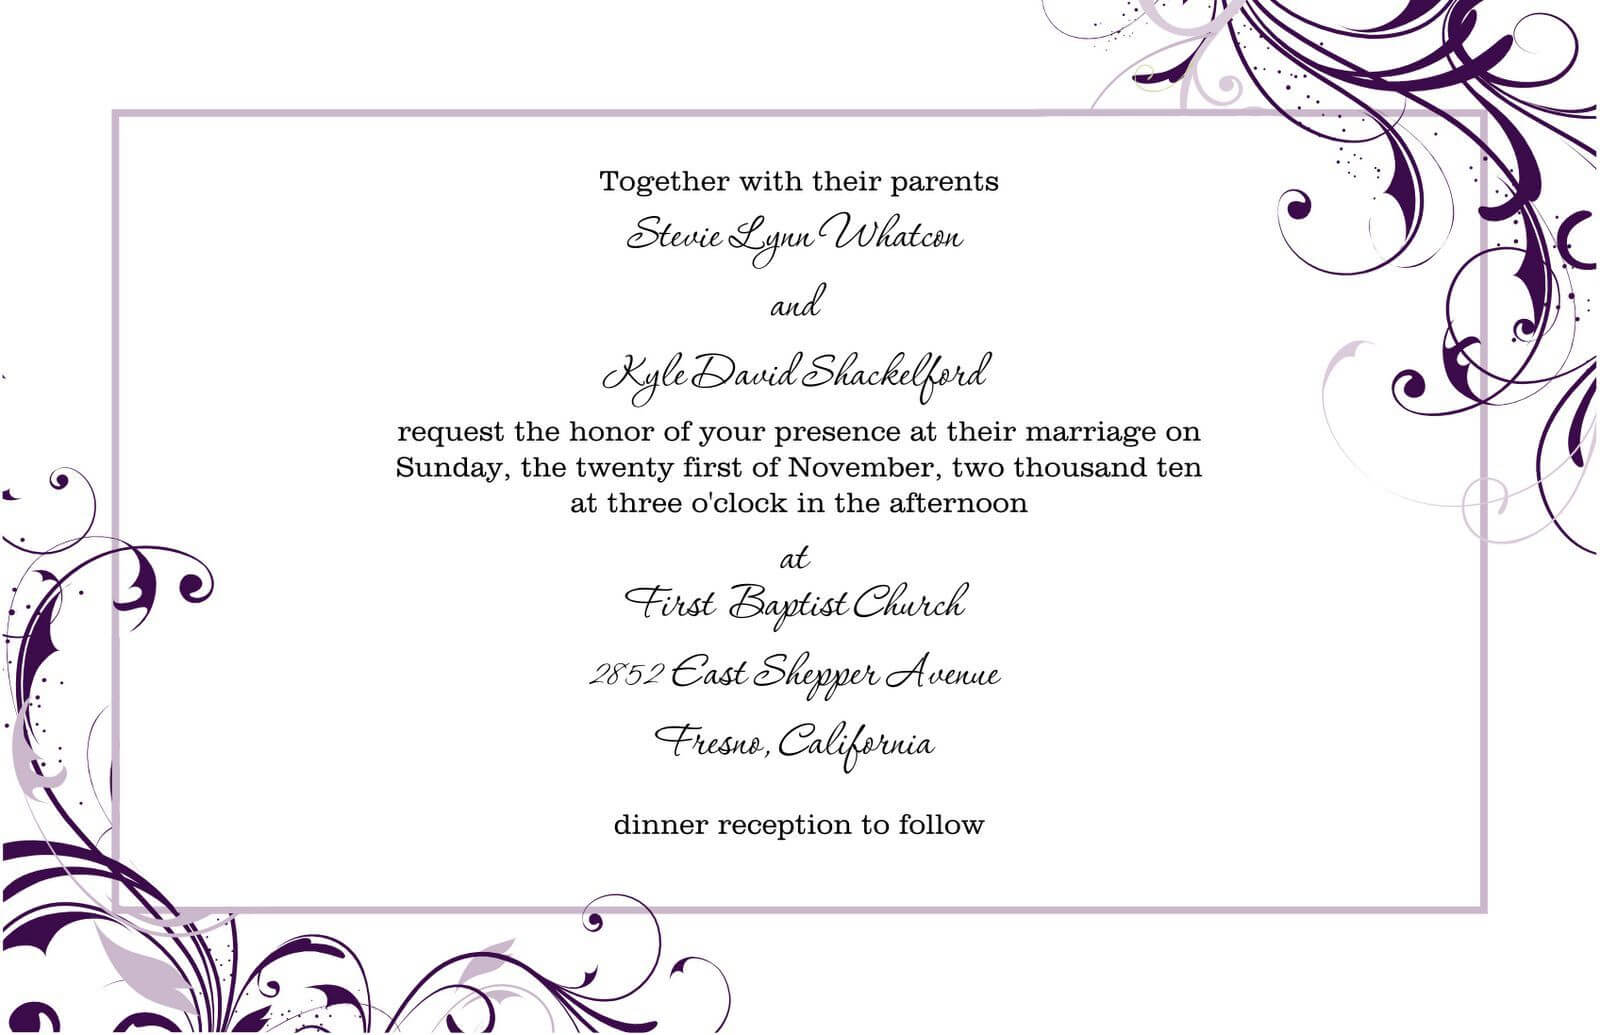 Blank Wedding Invitation Templates For Microsoft Word In Free Dinner Invitation Templates For Word